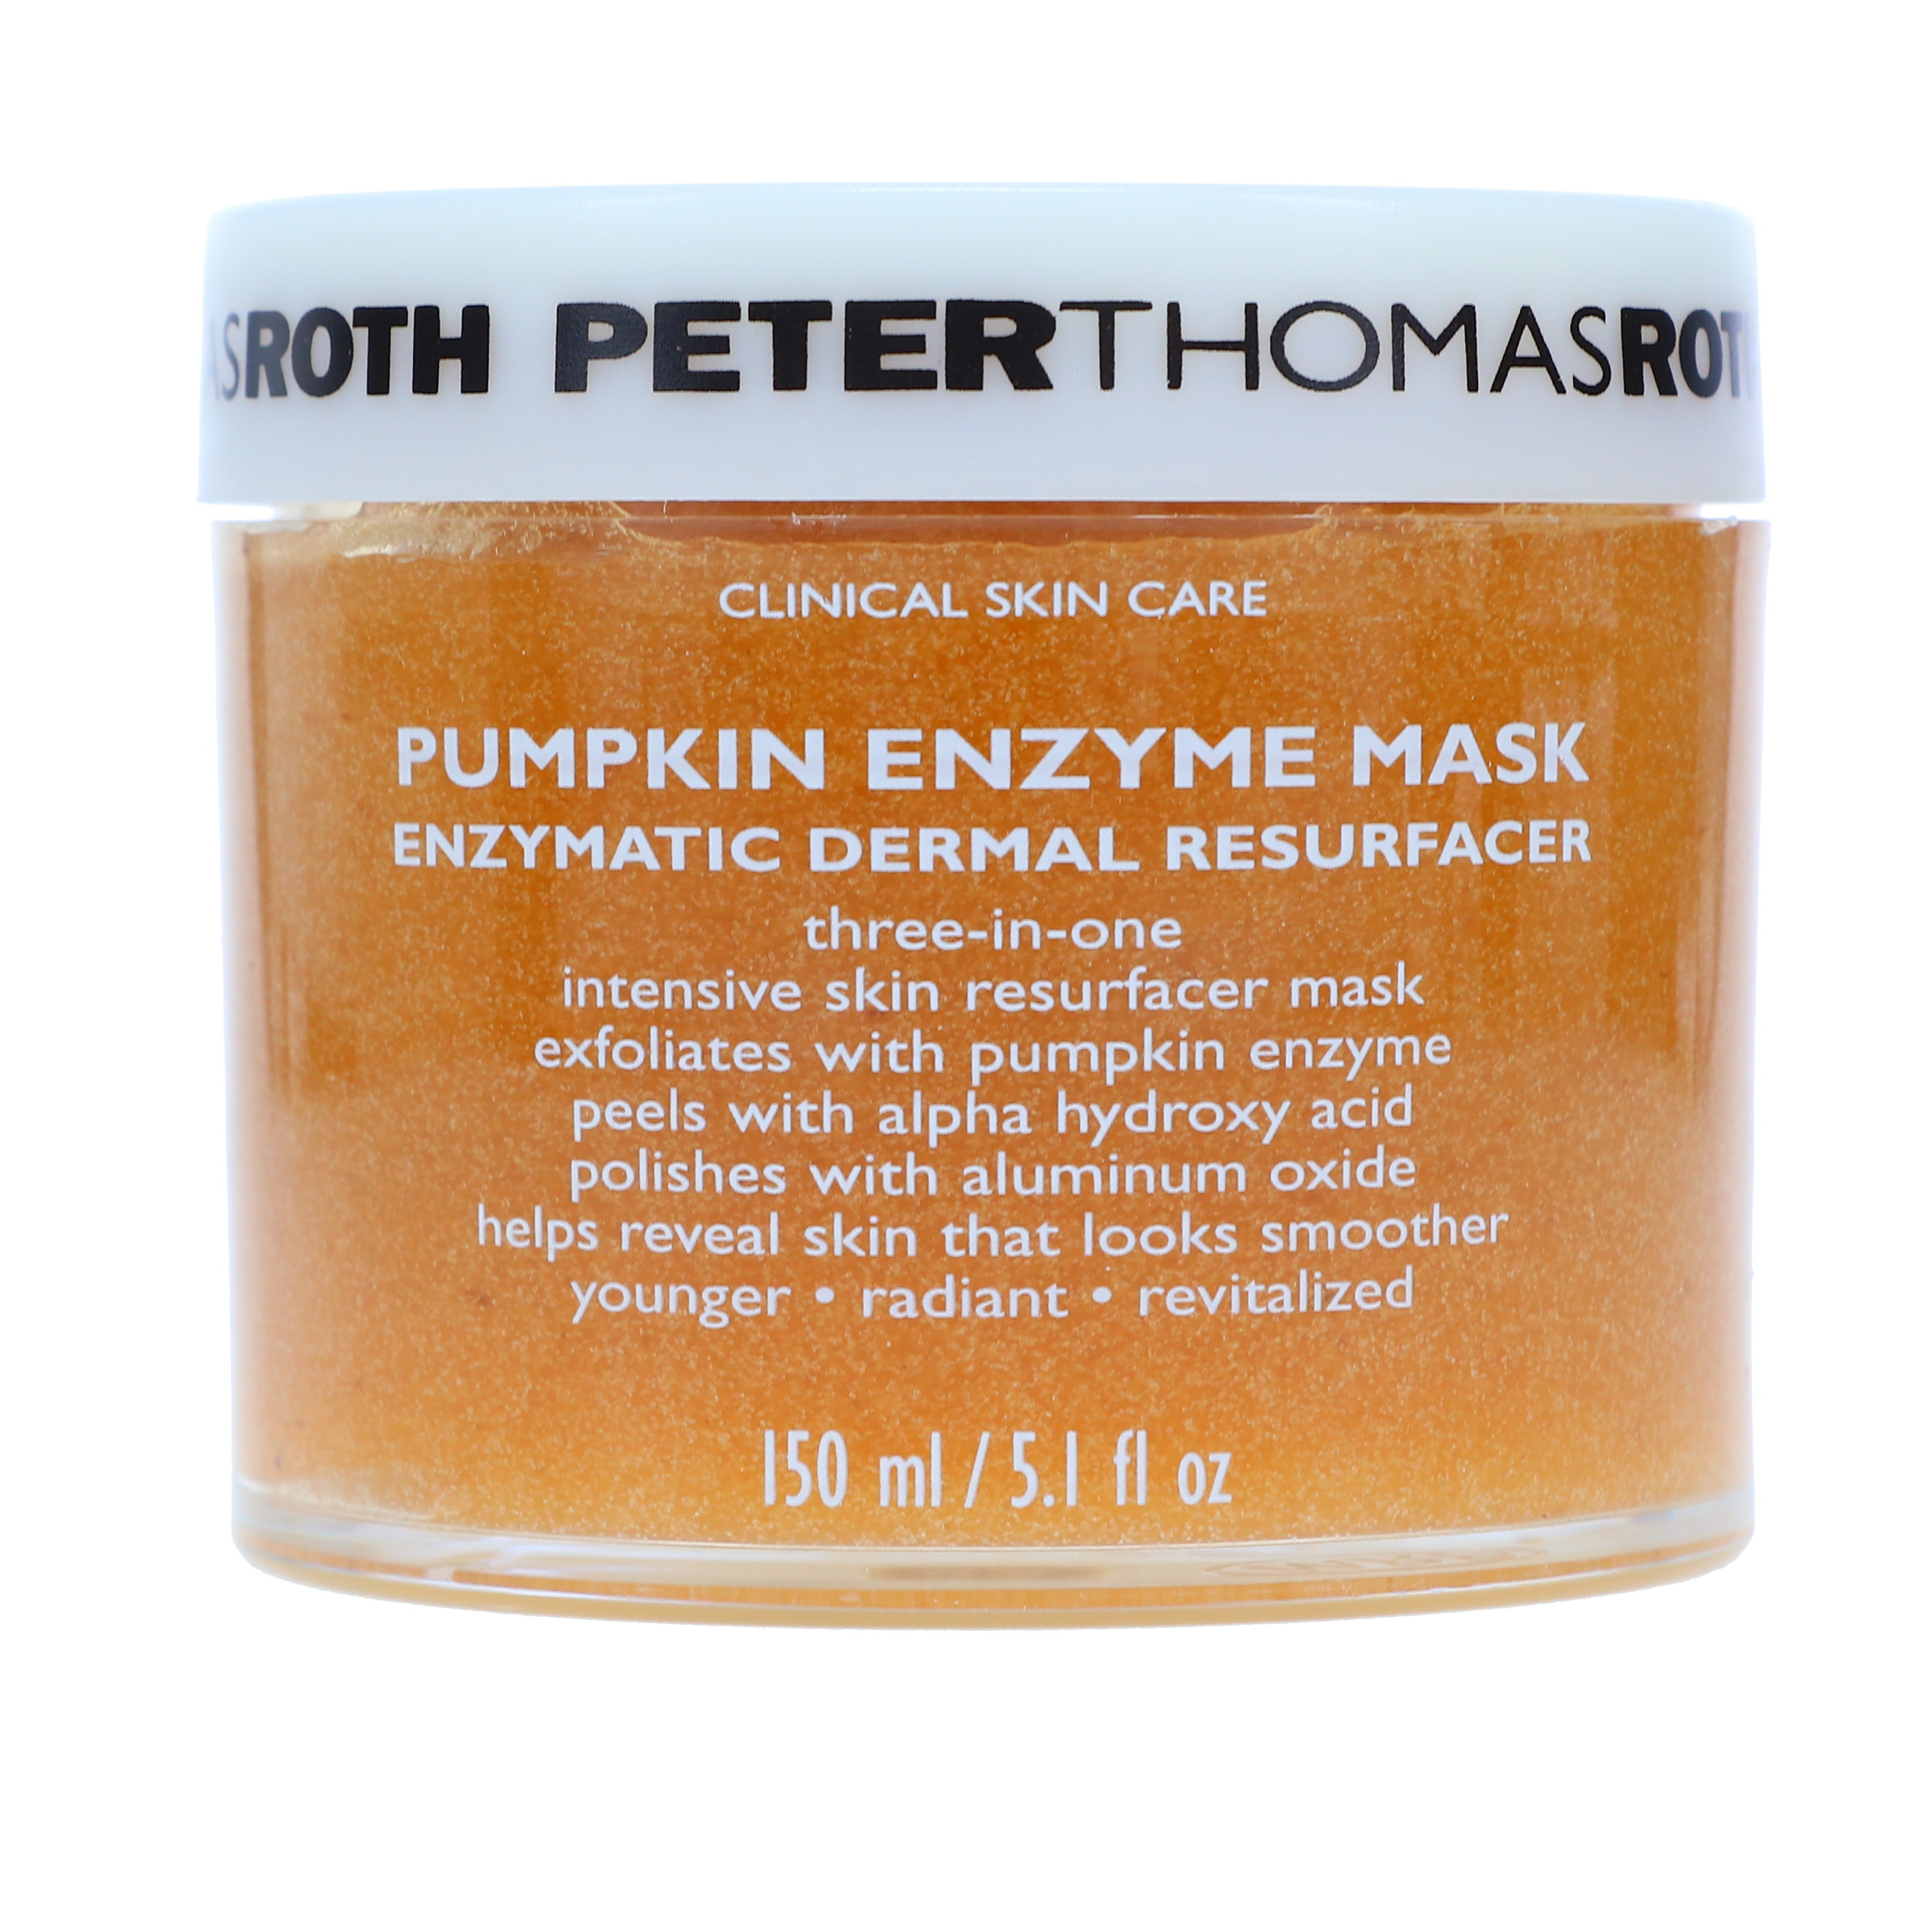 Peter Thomas Roth Pumpkin Enzyme Mask 5 oz - image 1 of 8